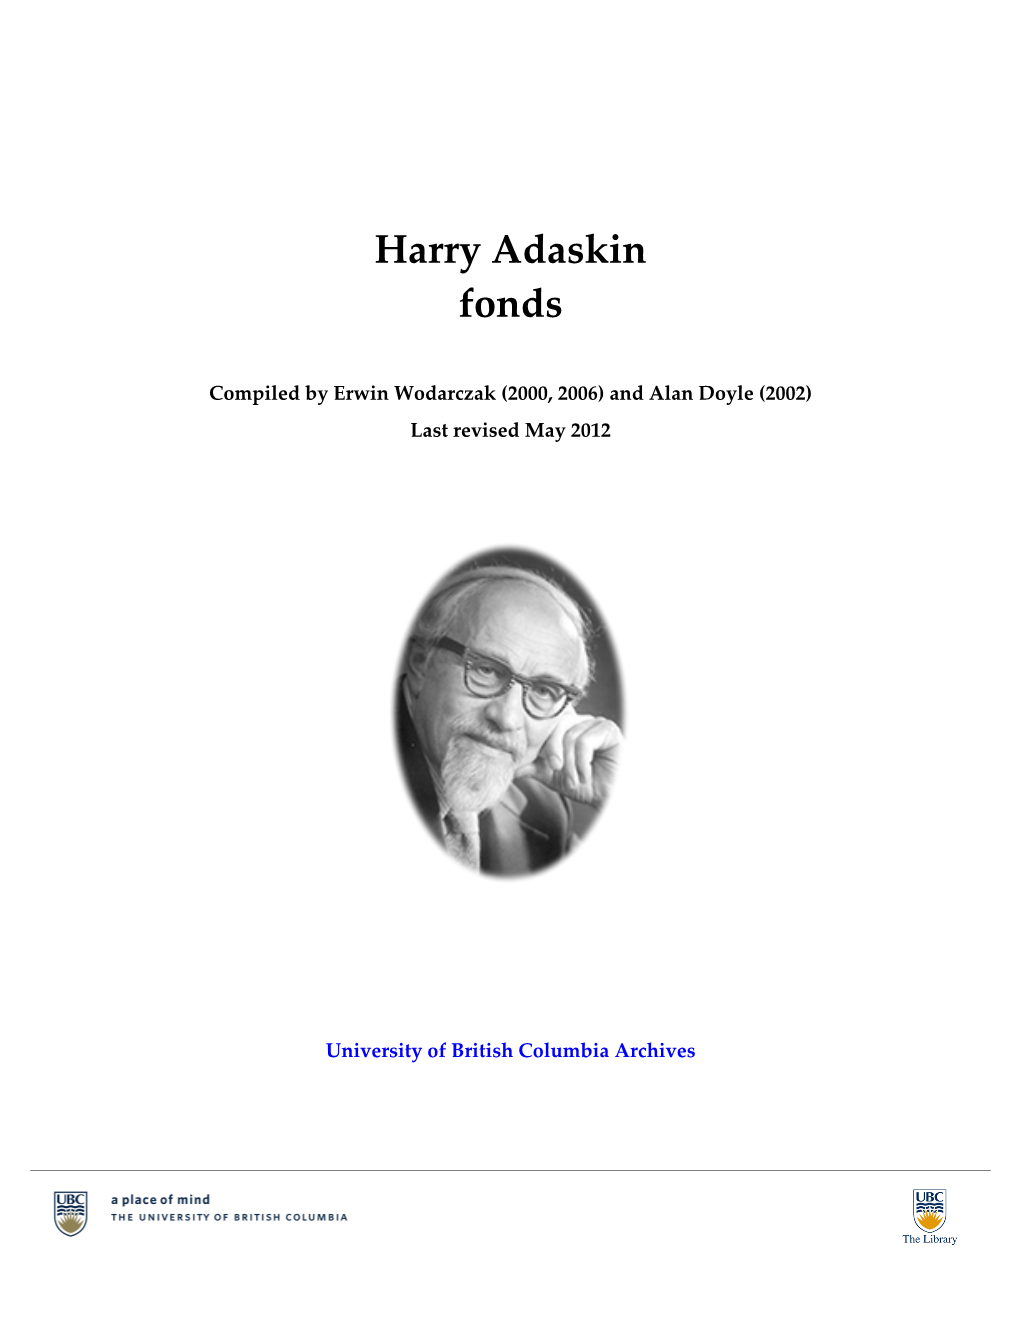 Harry Adaskin Fonds